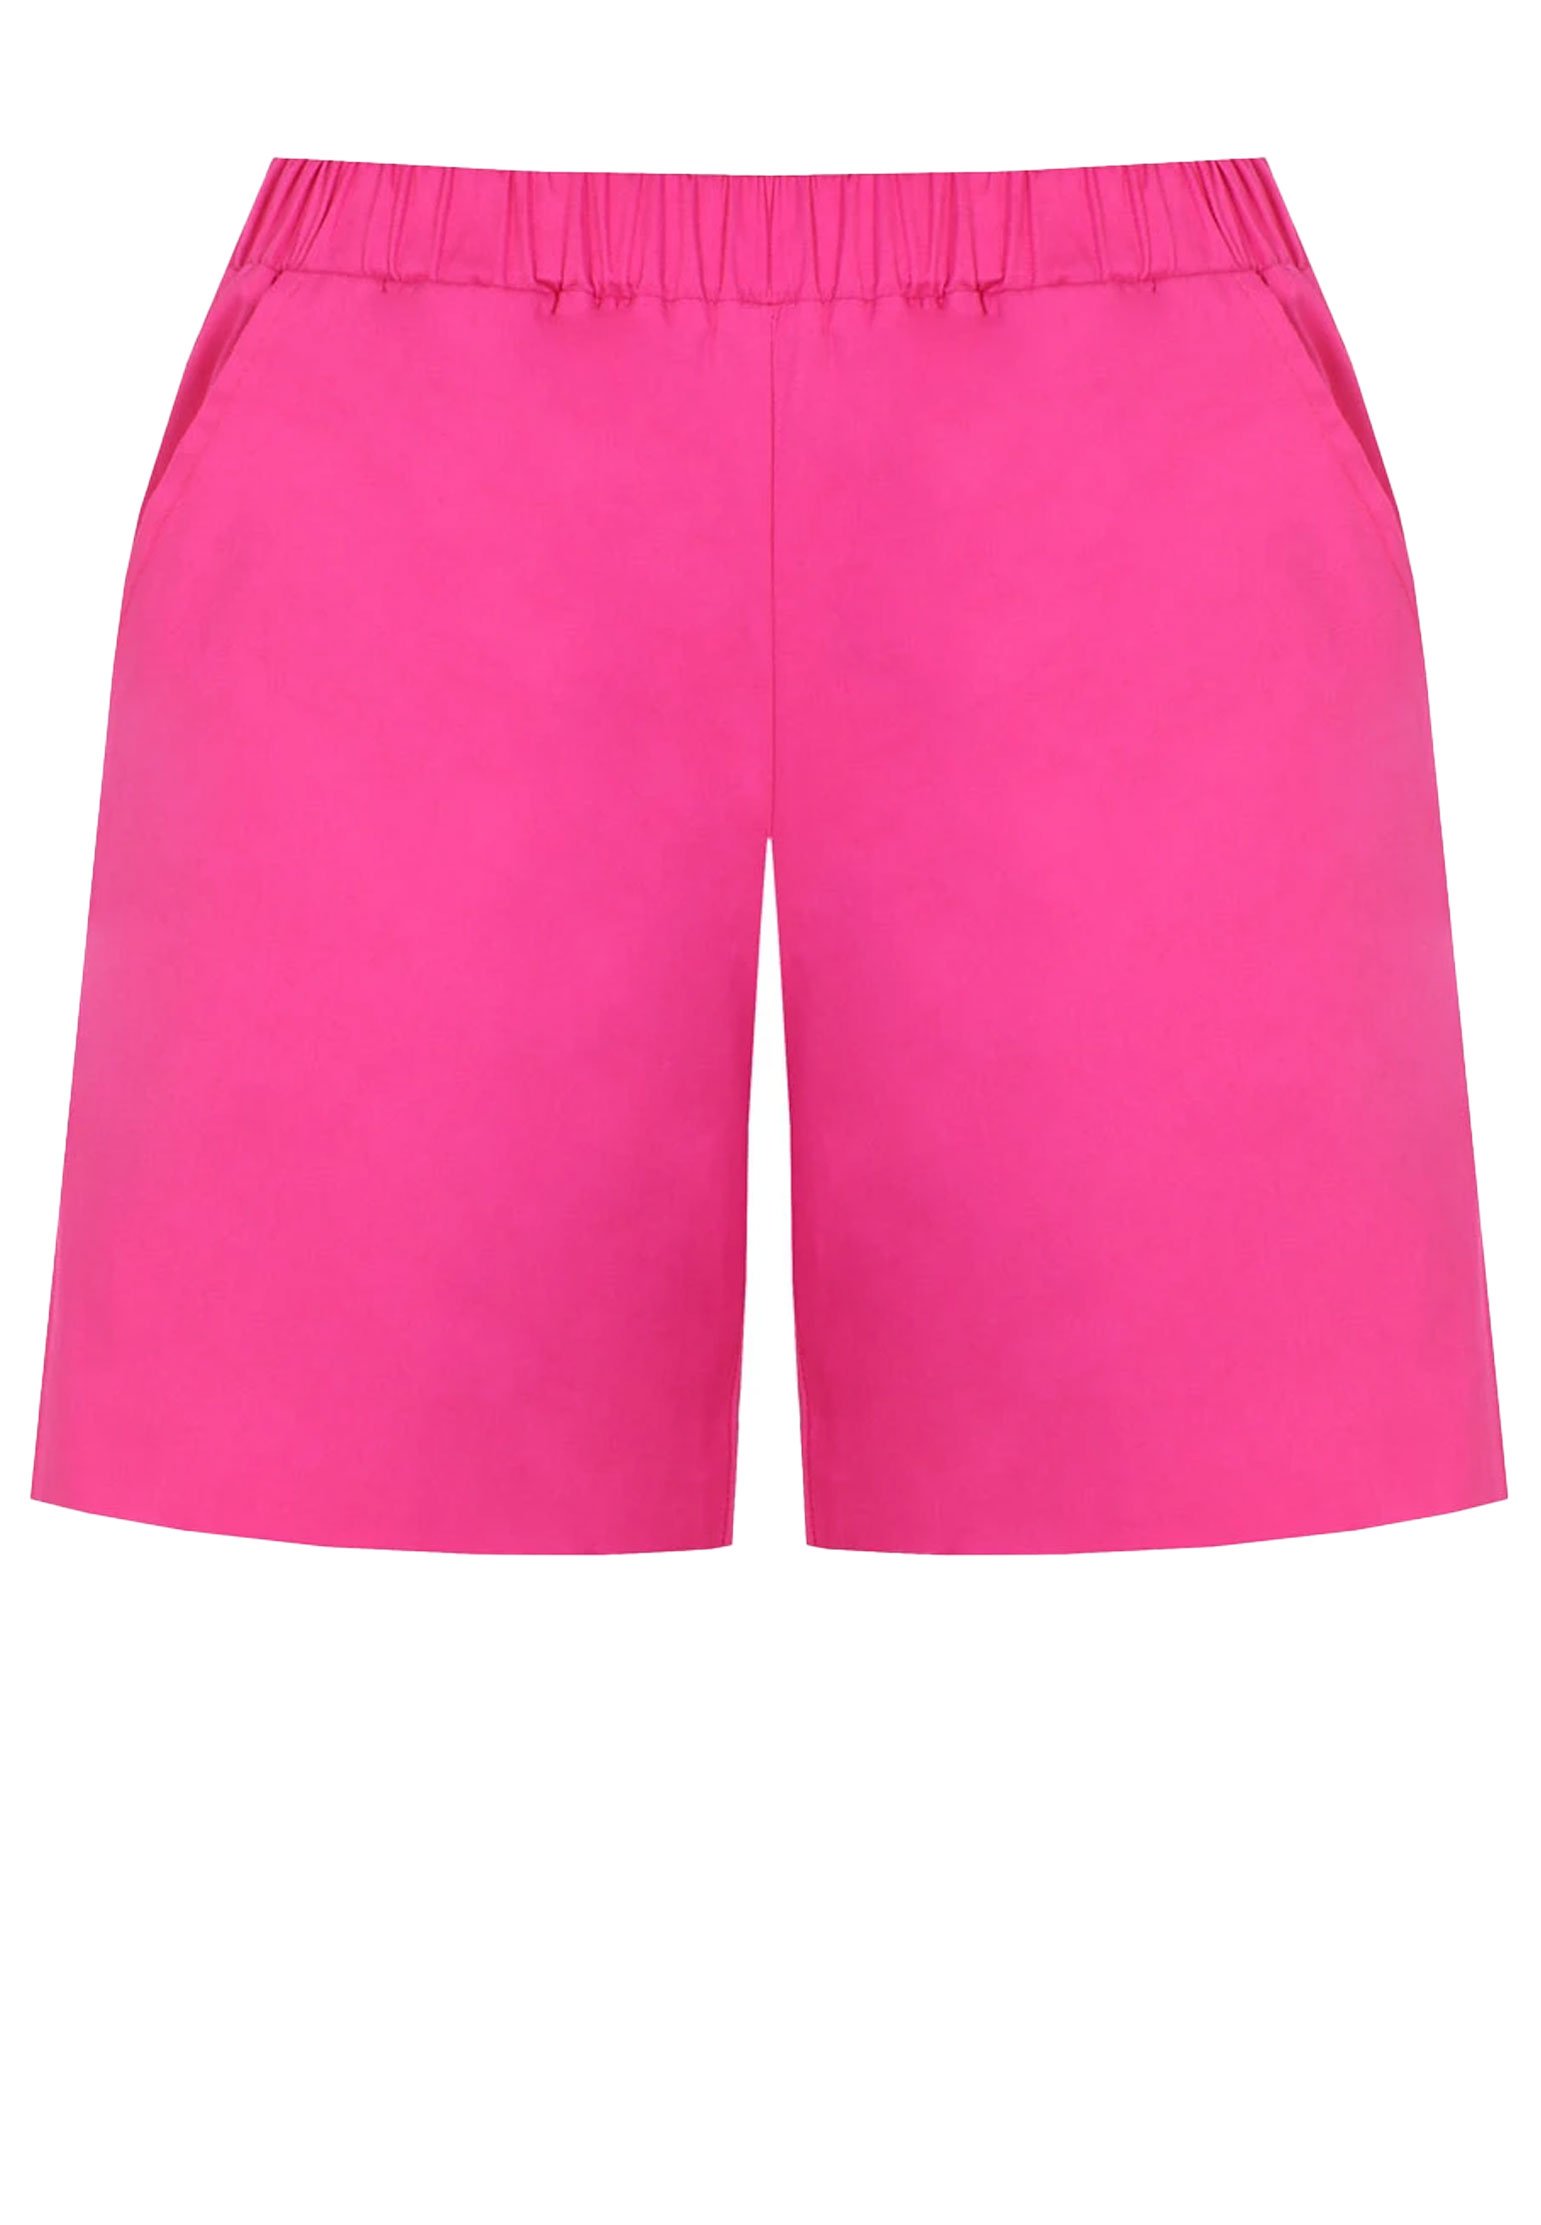 Shorts RALUCA MIHALCEA Color: pink (Code: 3081) in online store Allure